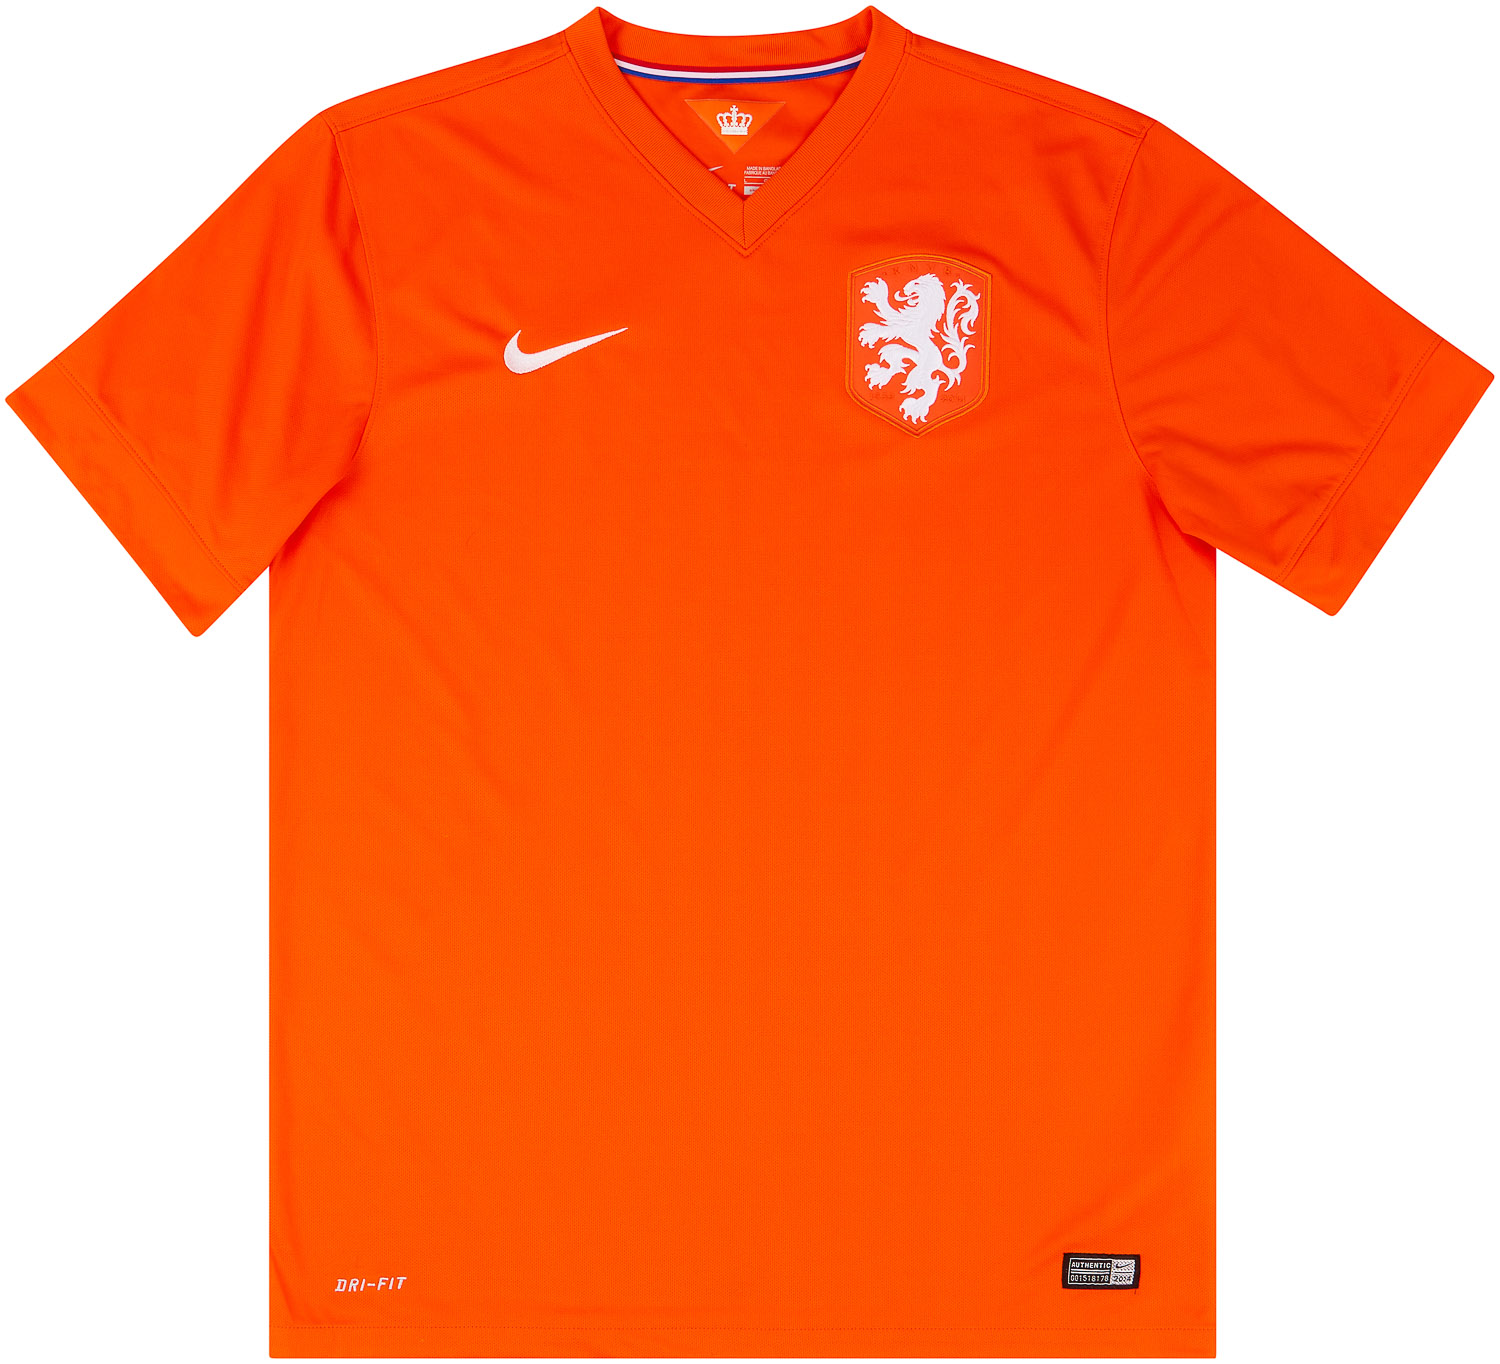 Netherlands  home camisa (Original)